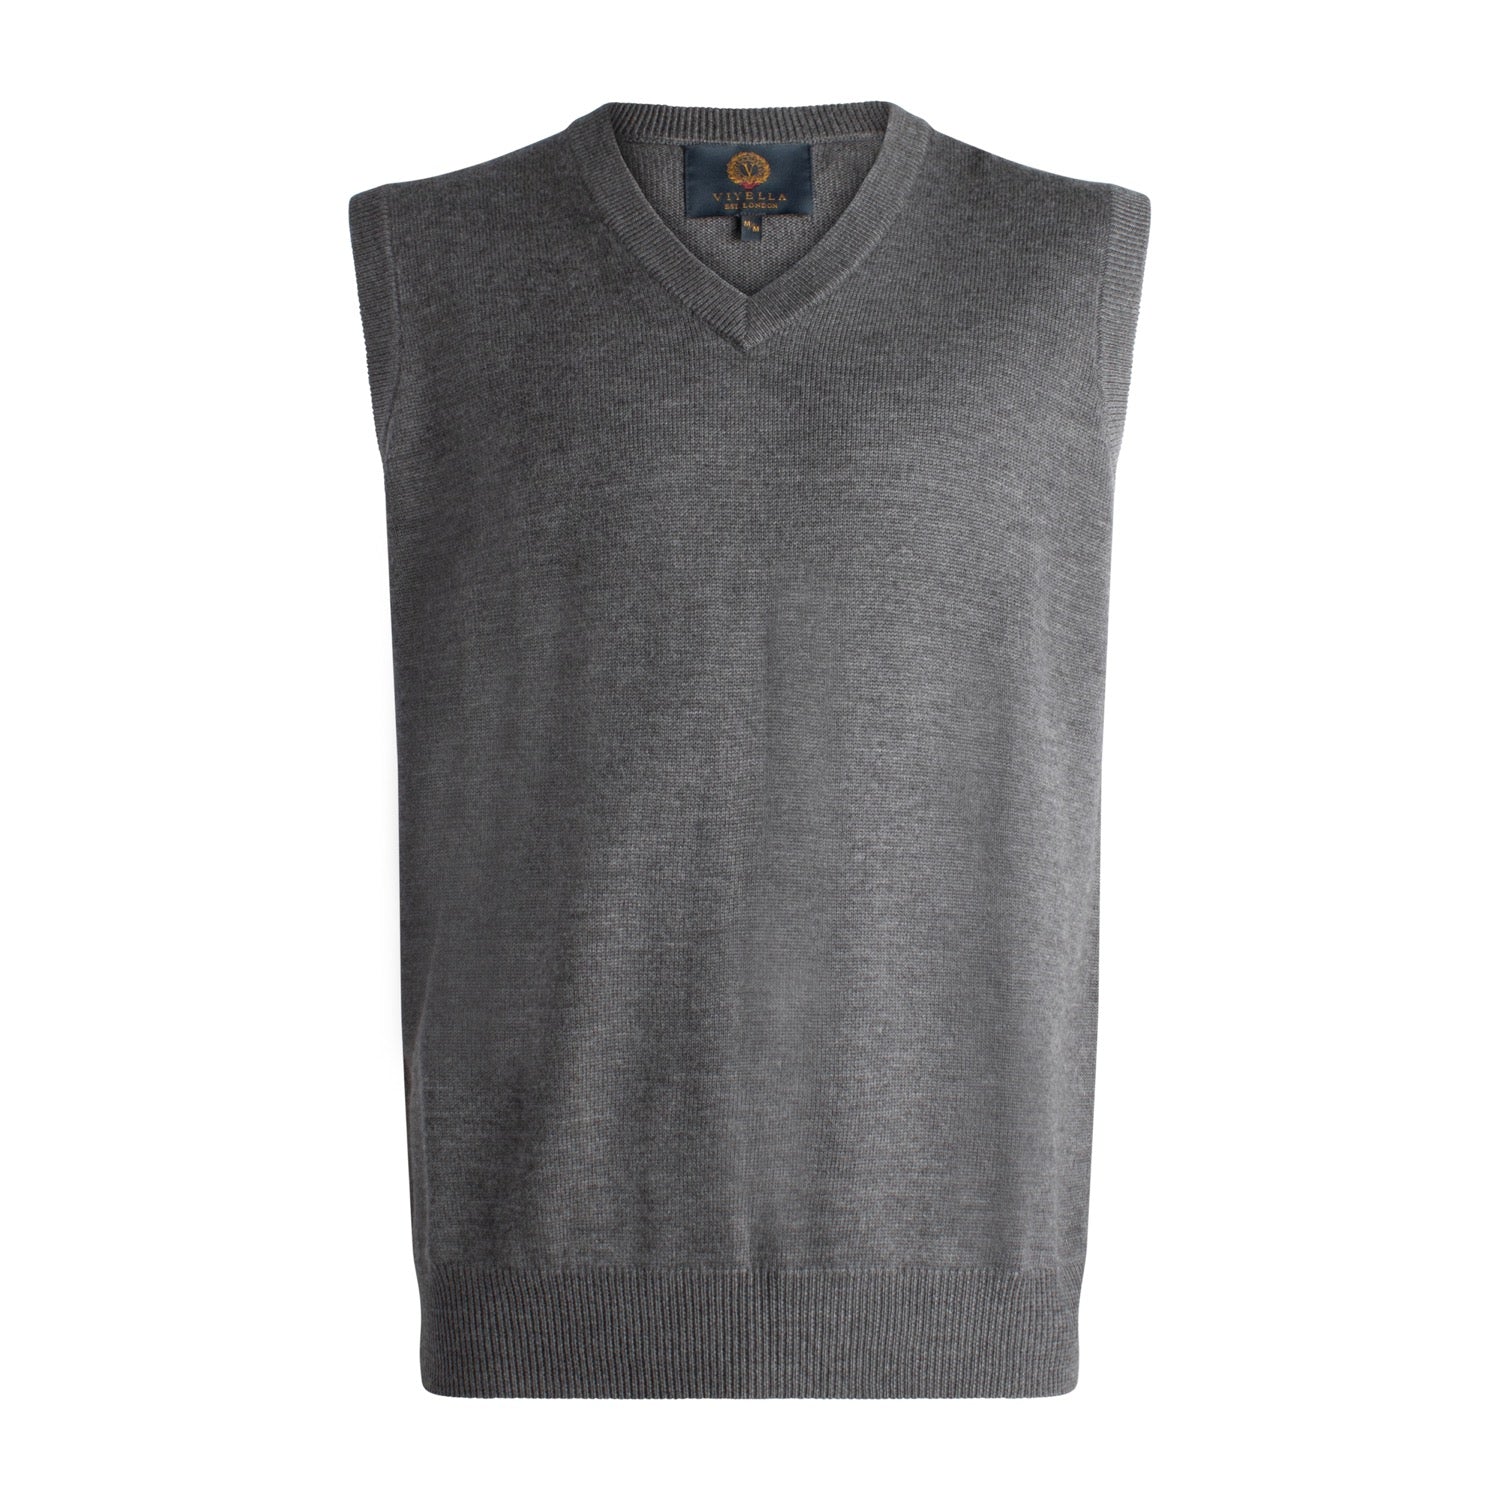 Extra Fine 'Zegna Baruffa' Merino Wool V-Neck Sleeveless Sweater Vest in Charcoal by Viyella